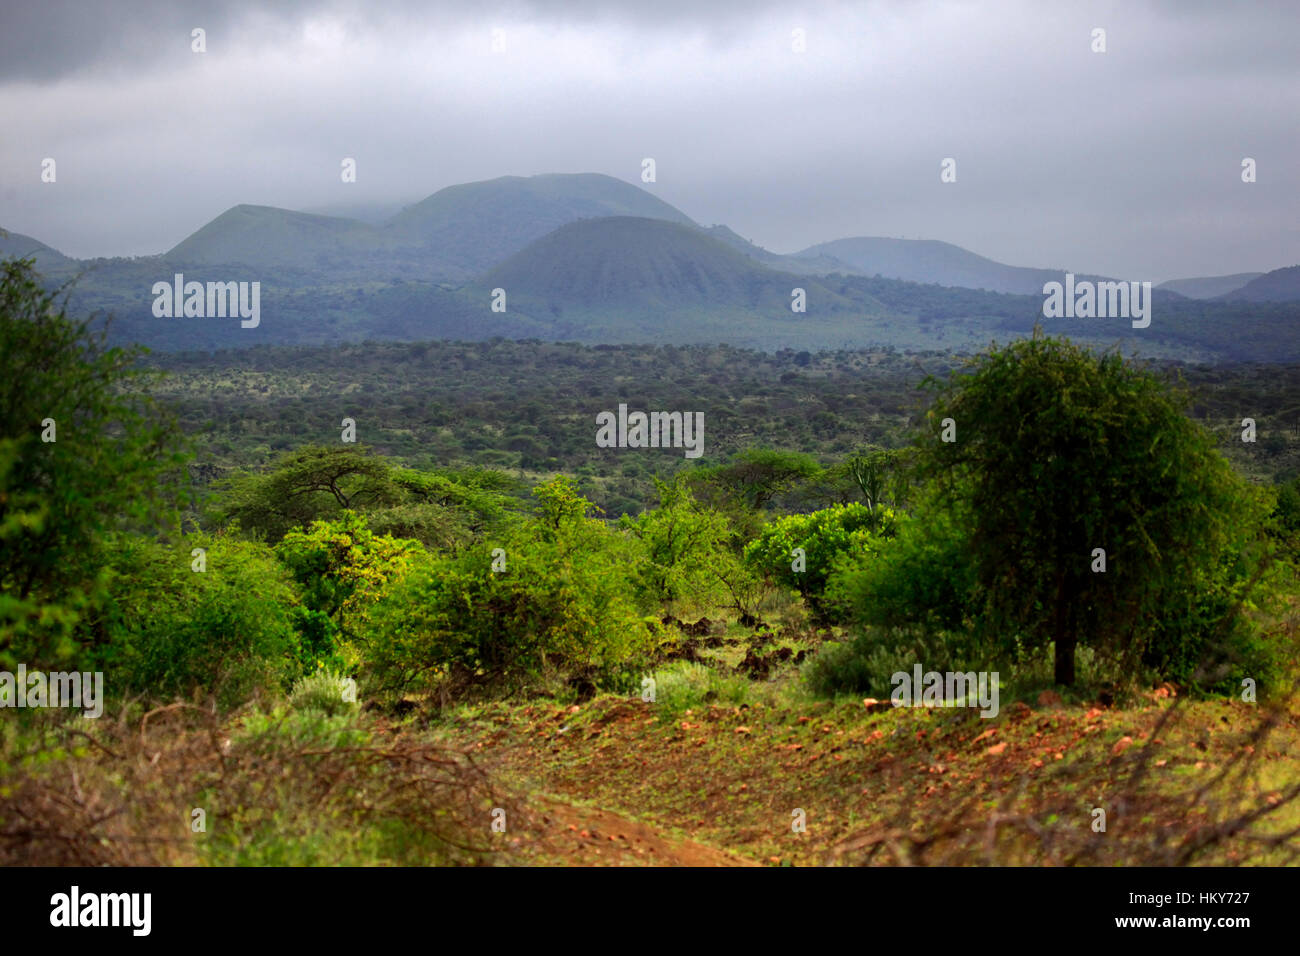 Parken Sie Tsavo East National - Salah Satu Yang Tertua Dan Taman Negara Terbesar di Kenia Stockfoto